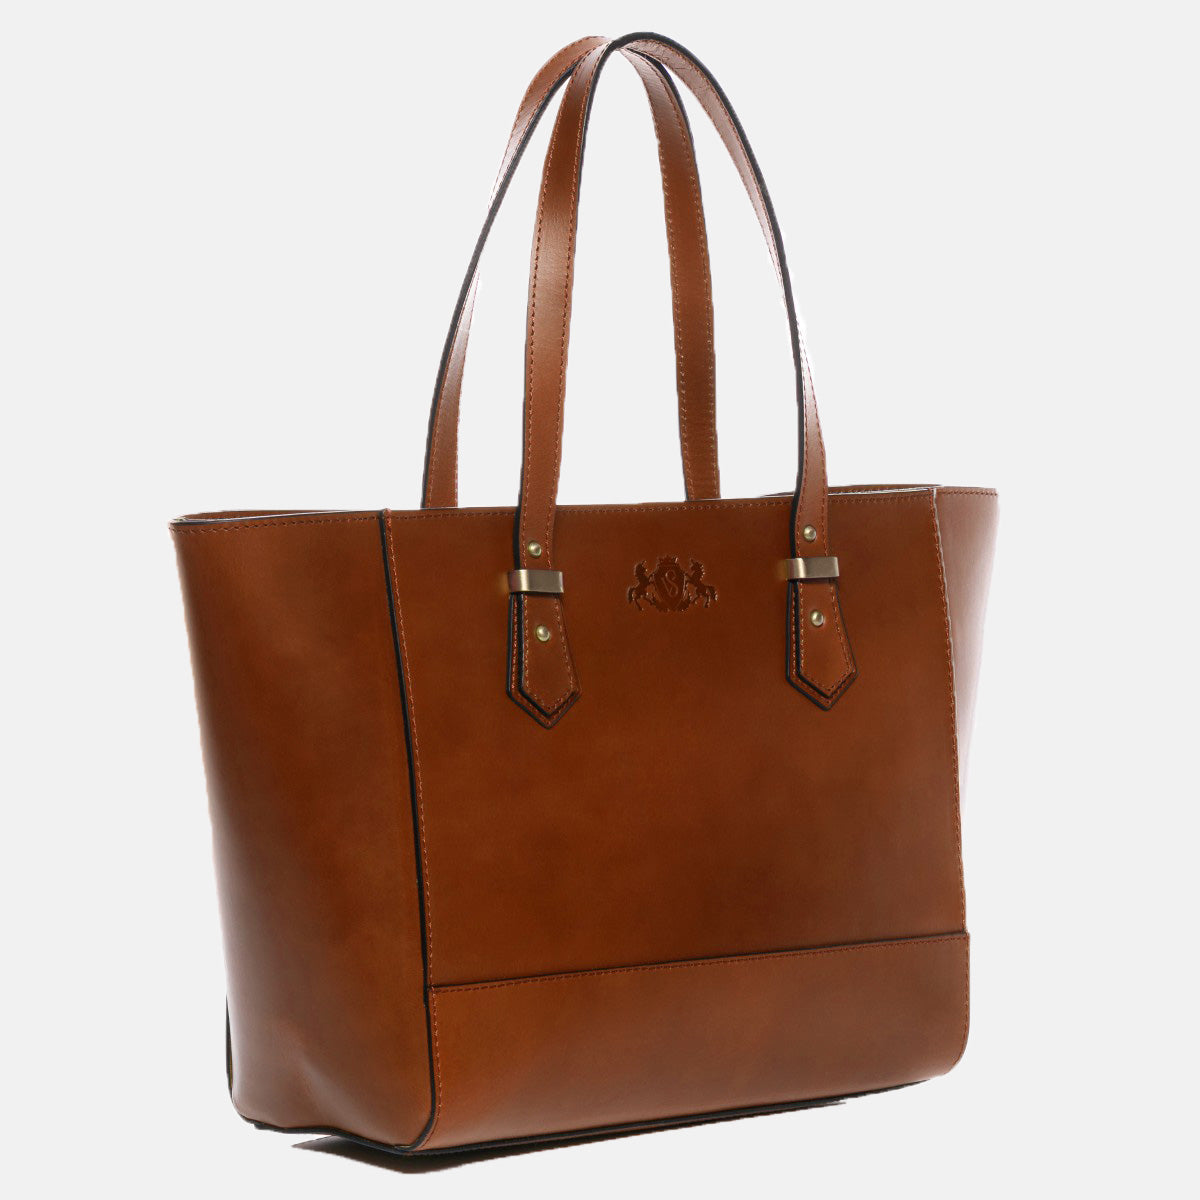 Handbag TRISH saddle leather light brown-cognac